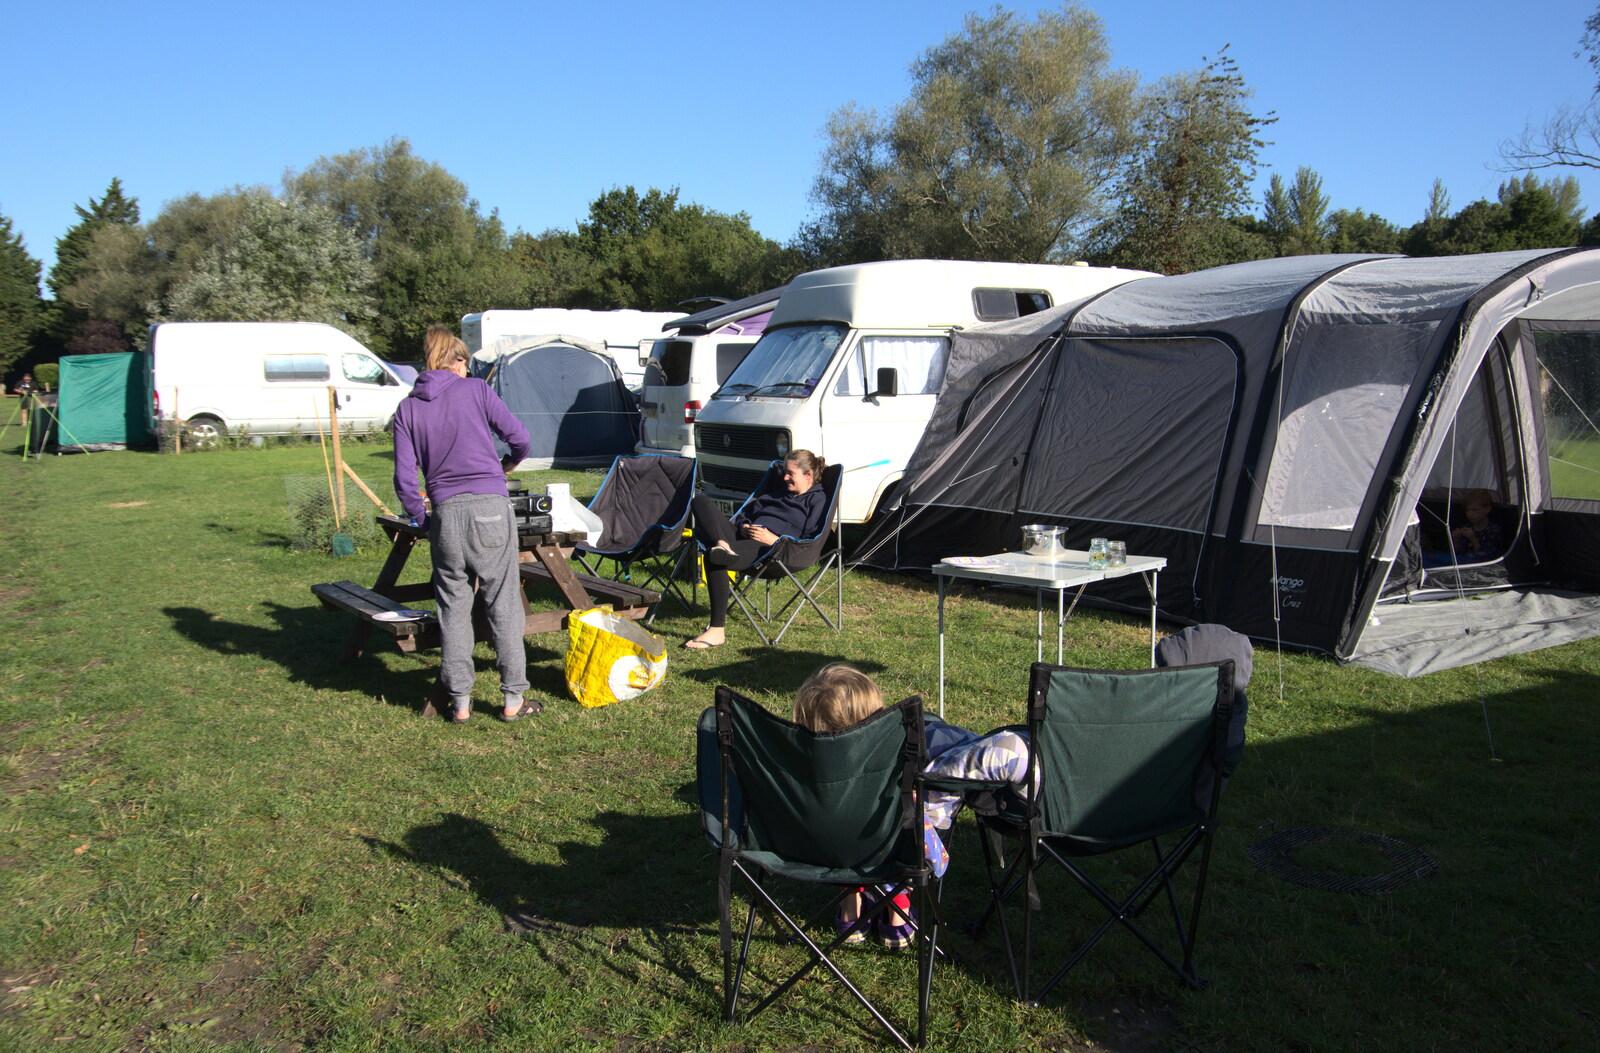 Camping at Three Rivers, Geldeston, Norfolk - 5th September 2020: Hanging around the camp site